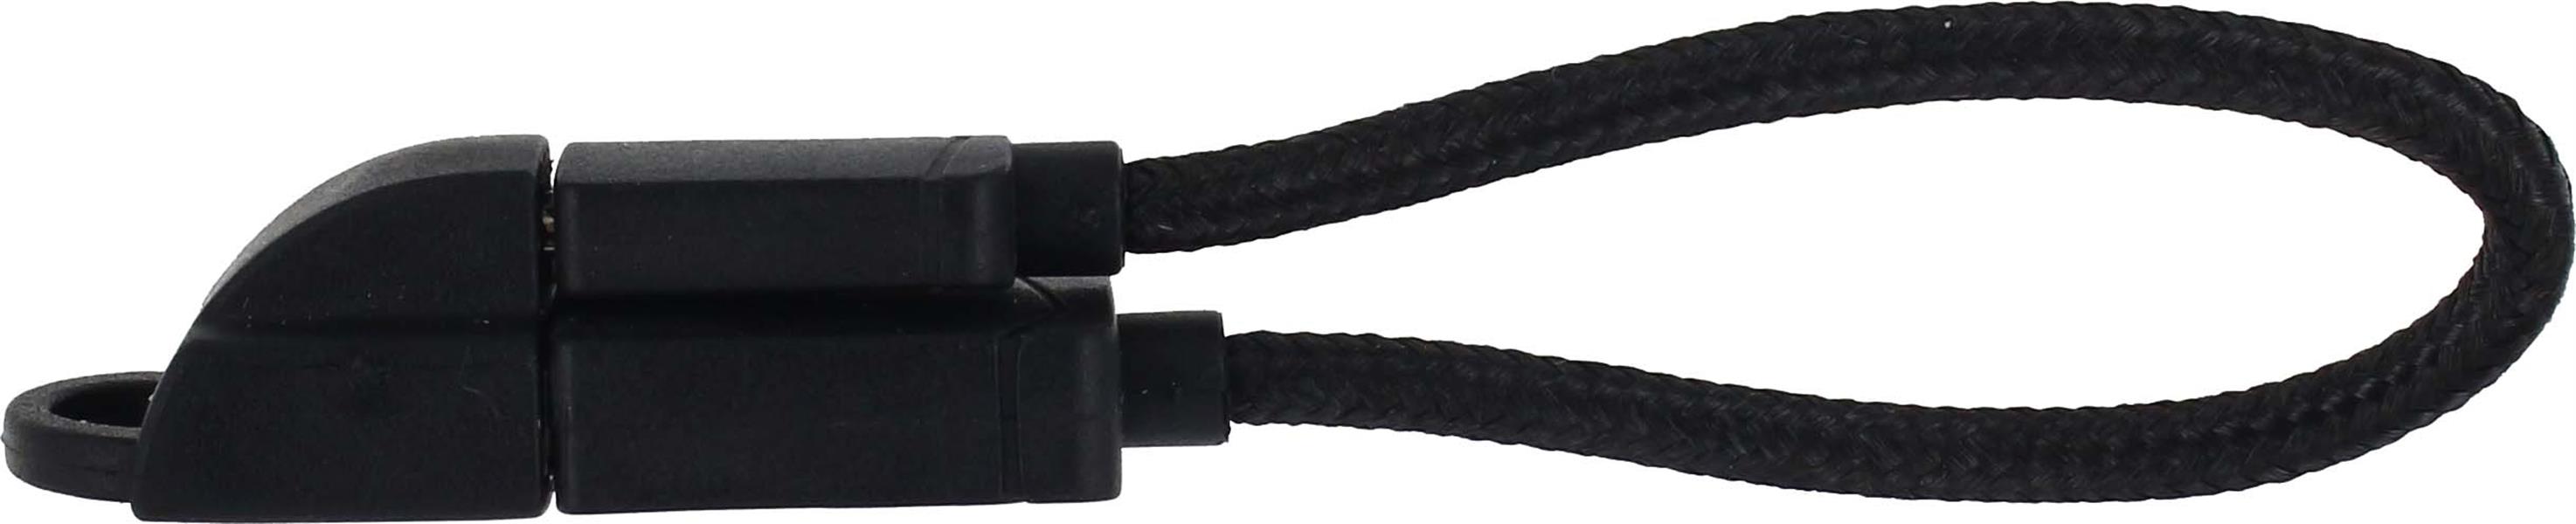 KeyMate Charge Sync Keychain Cable Nylon Braided Micro USB Black